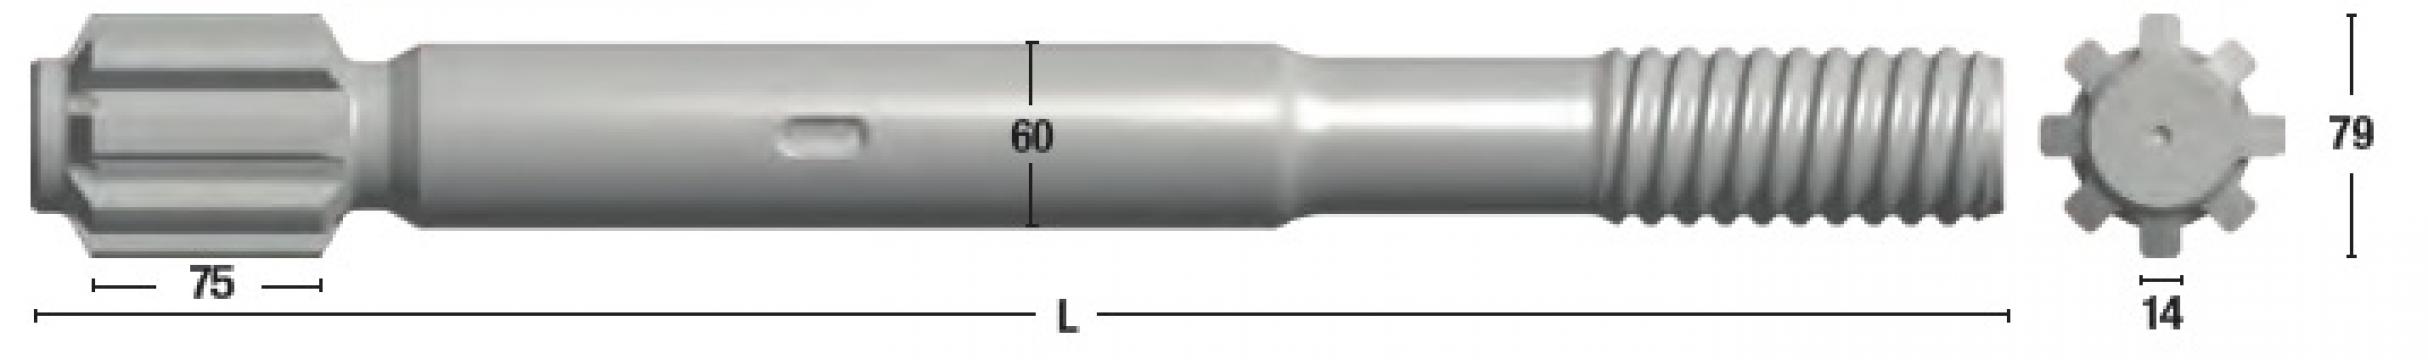 Adaptor pentru Sandvik HL1000, filet GT60, corp 60mm de la Drill Rock Tools